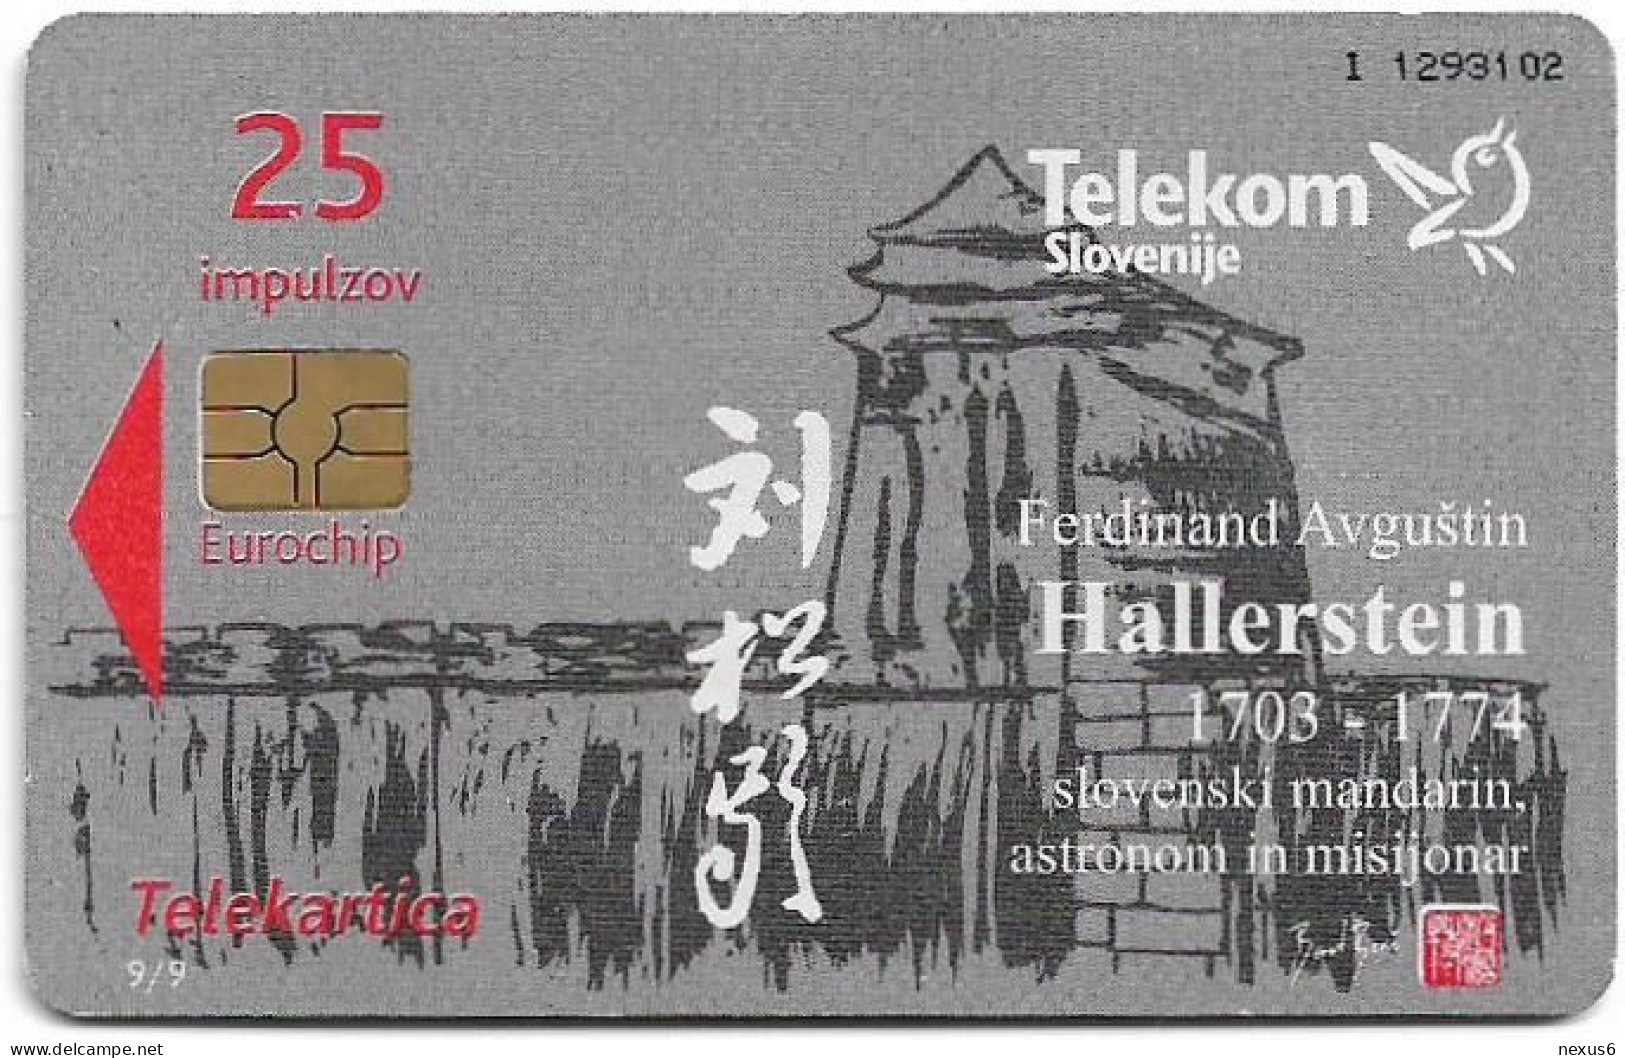 Slovenia - Telekom Slovenije - Mandarin F. A. Hallerstein - 9/9, Gem5 Red, Short Cn., 10.2007, 25Units, 5.000ex, Used - Slovénie